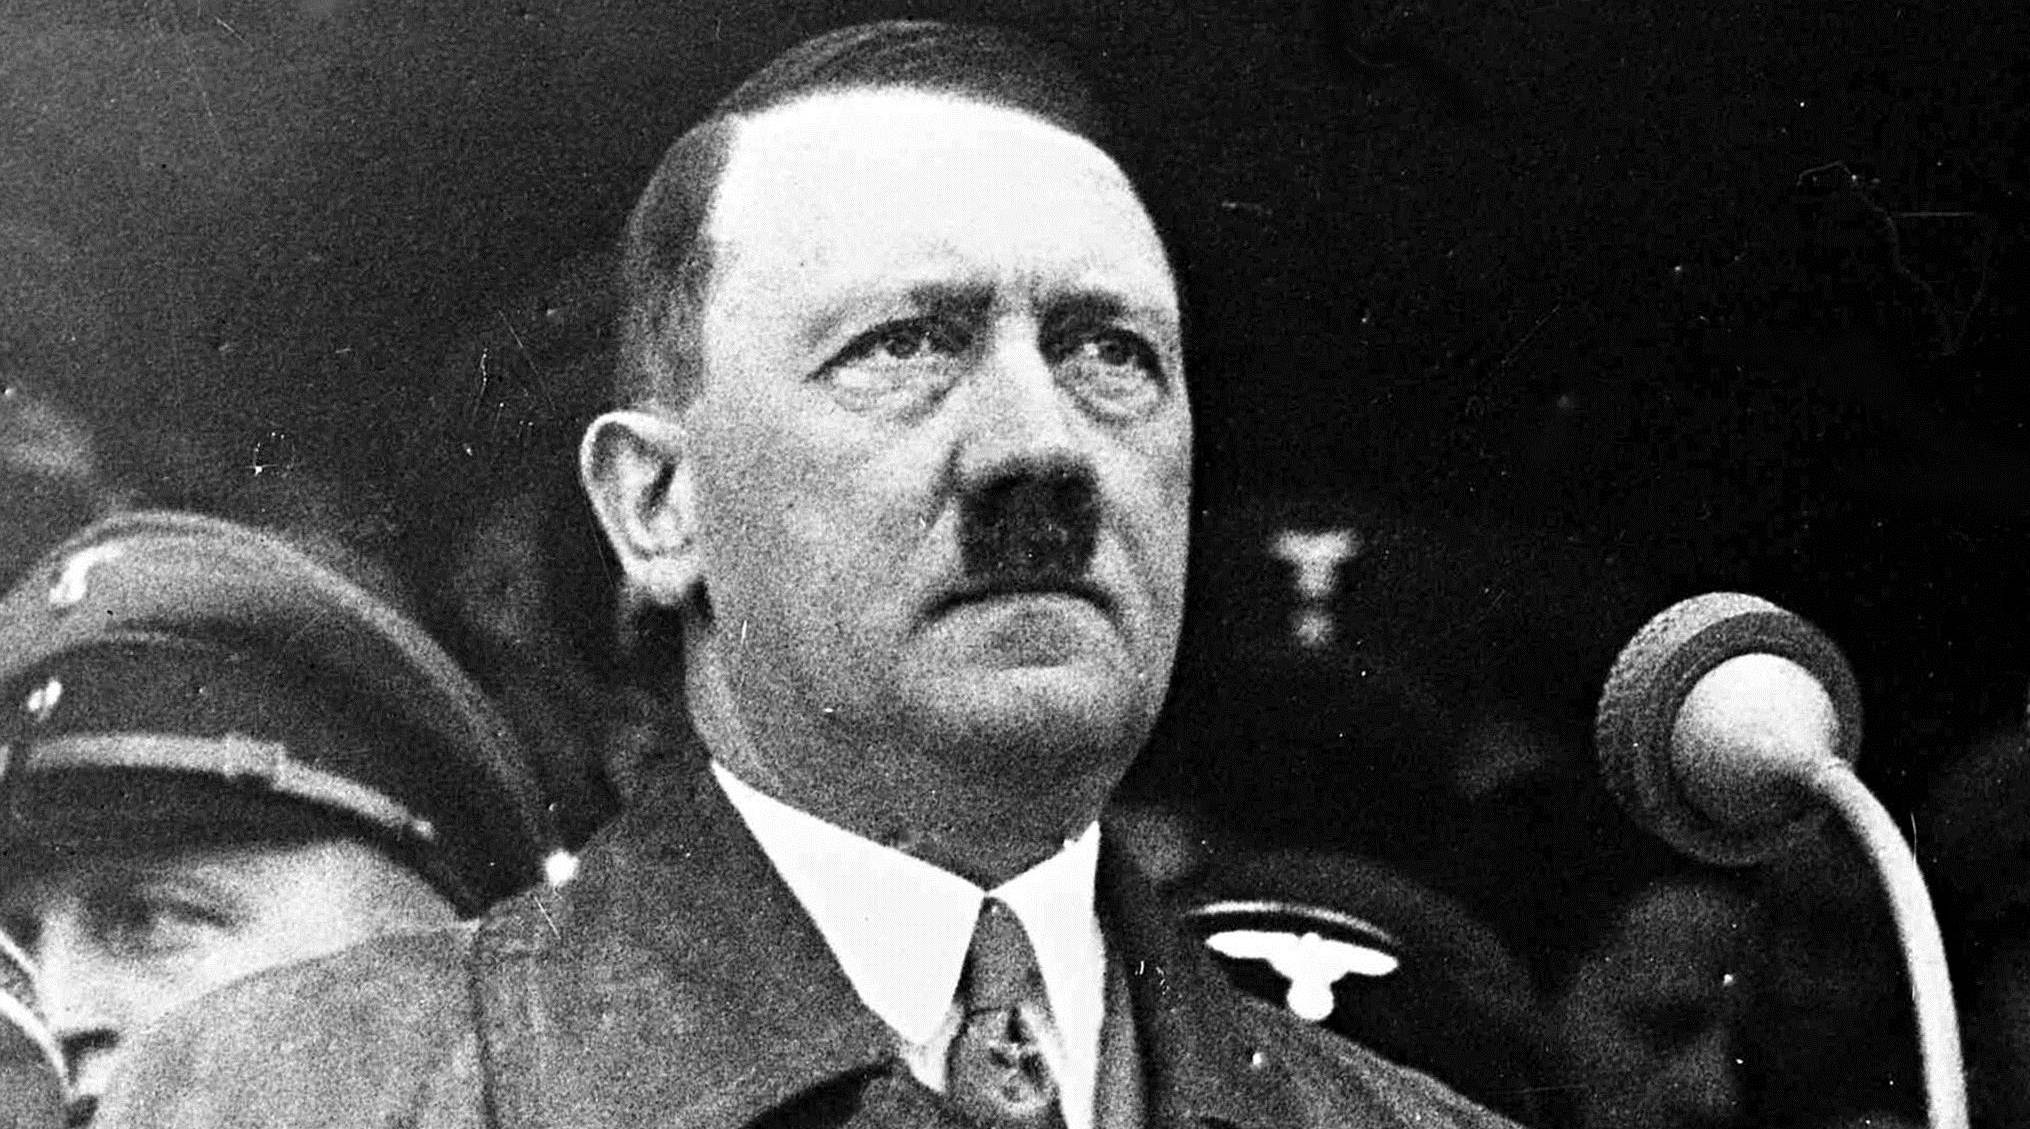 Adolf Hitler [image source]